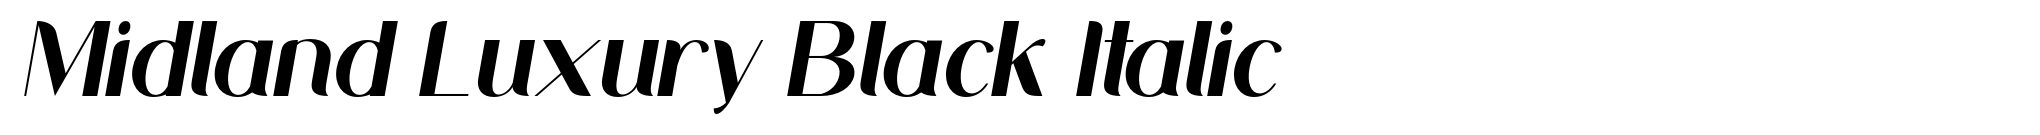 Midland Luxury Black Italic image